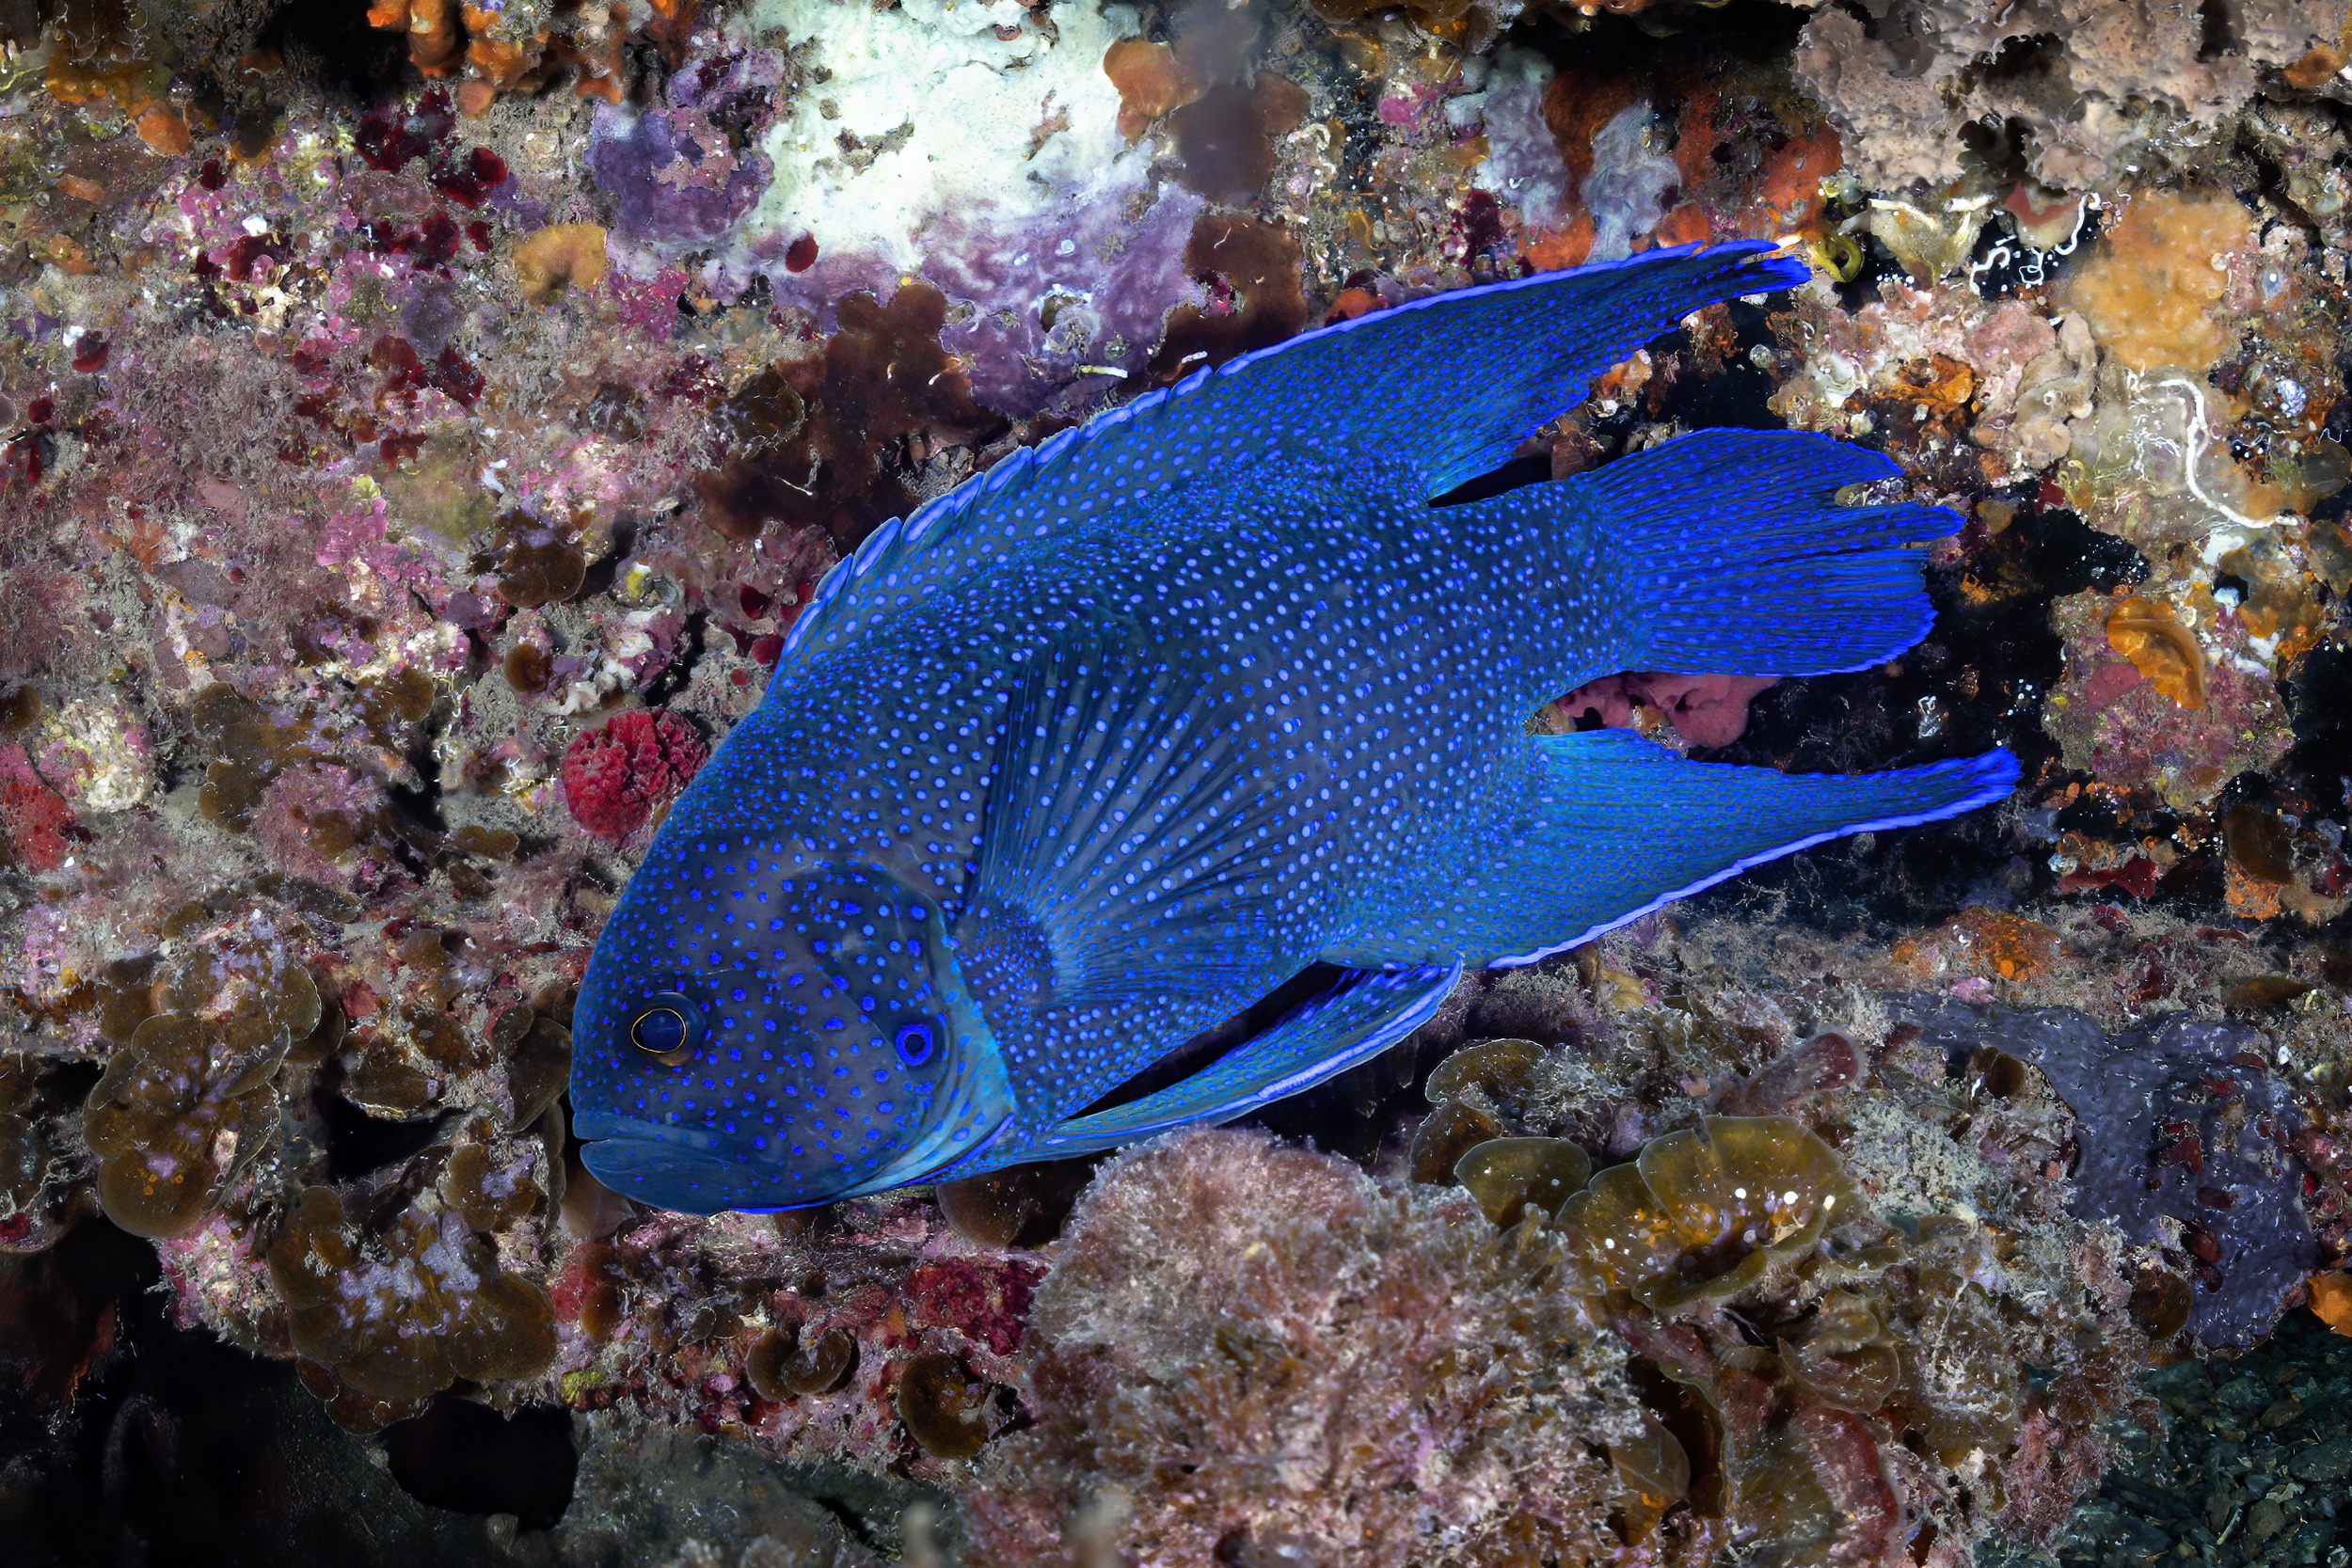 Eastern blue devil fish, Rapid Bay Jetty, South Australia. Photo by Don Silcock